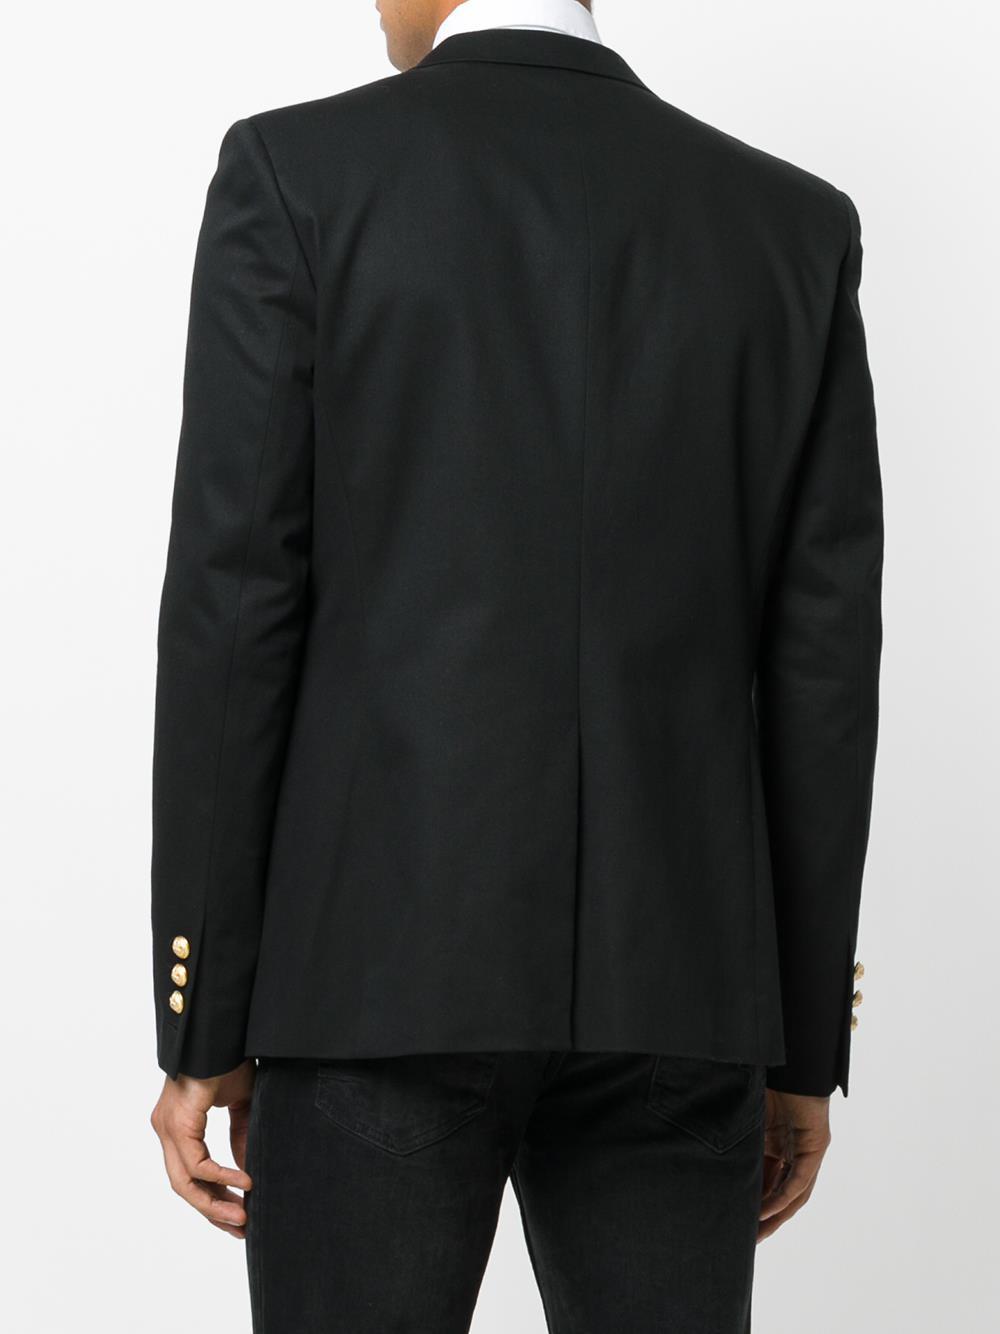 Balmain Leather Military Blazer in Black for Men - Lyst